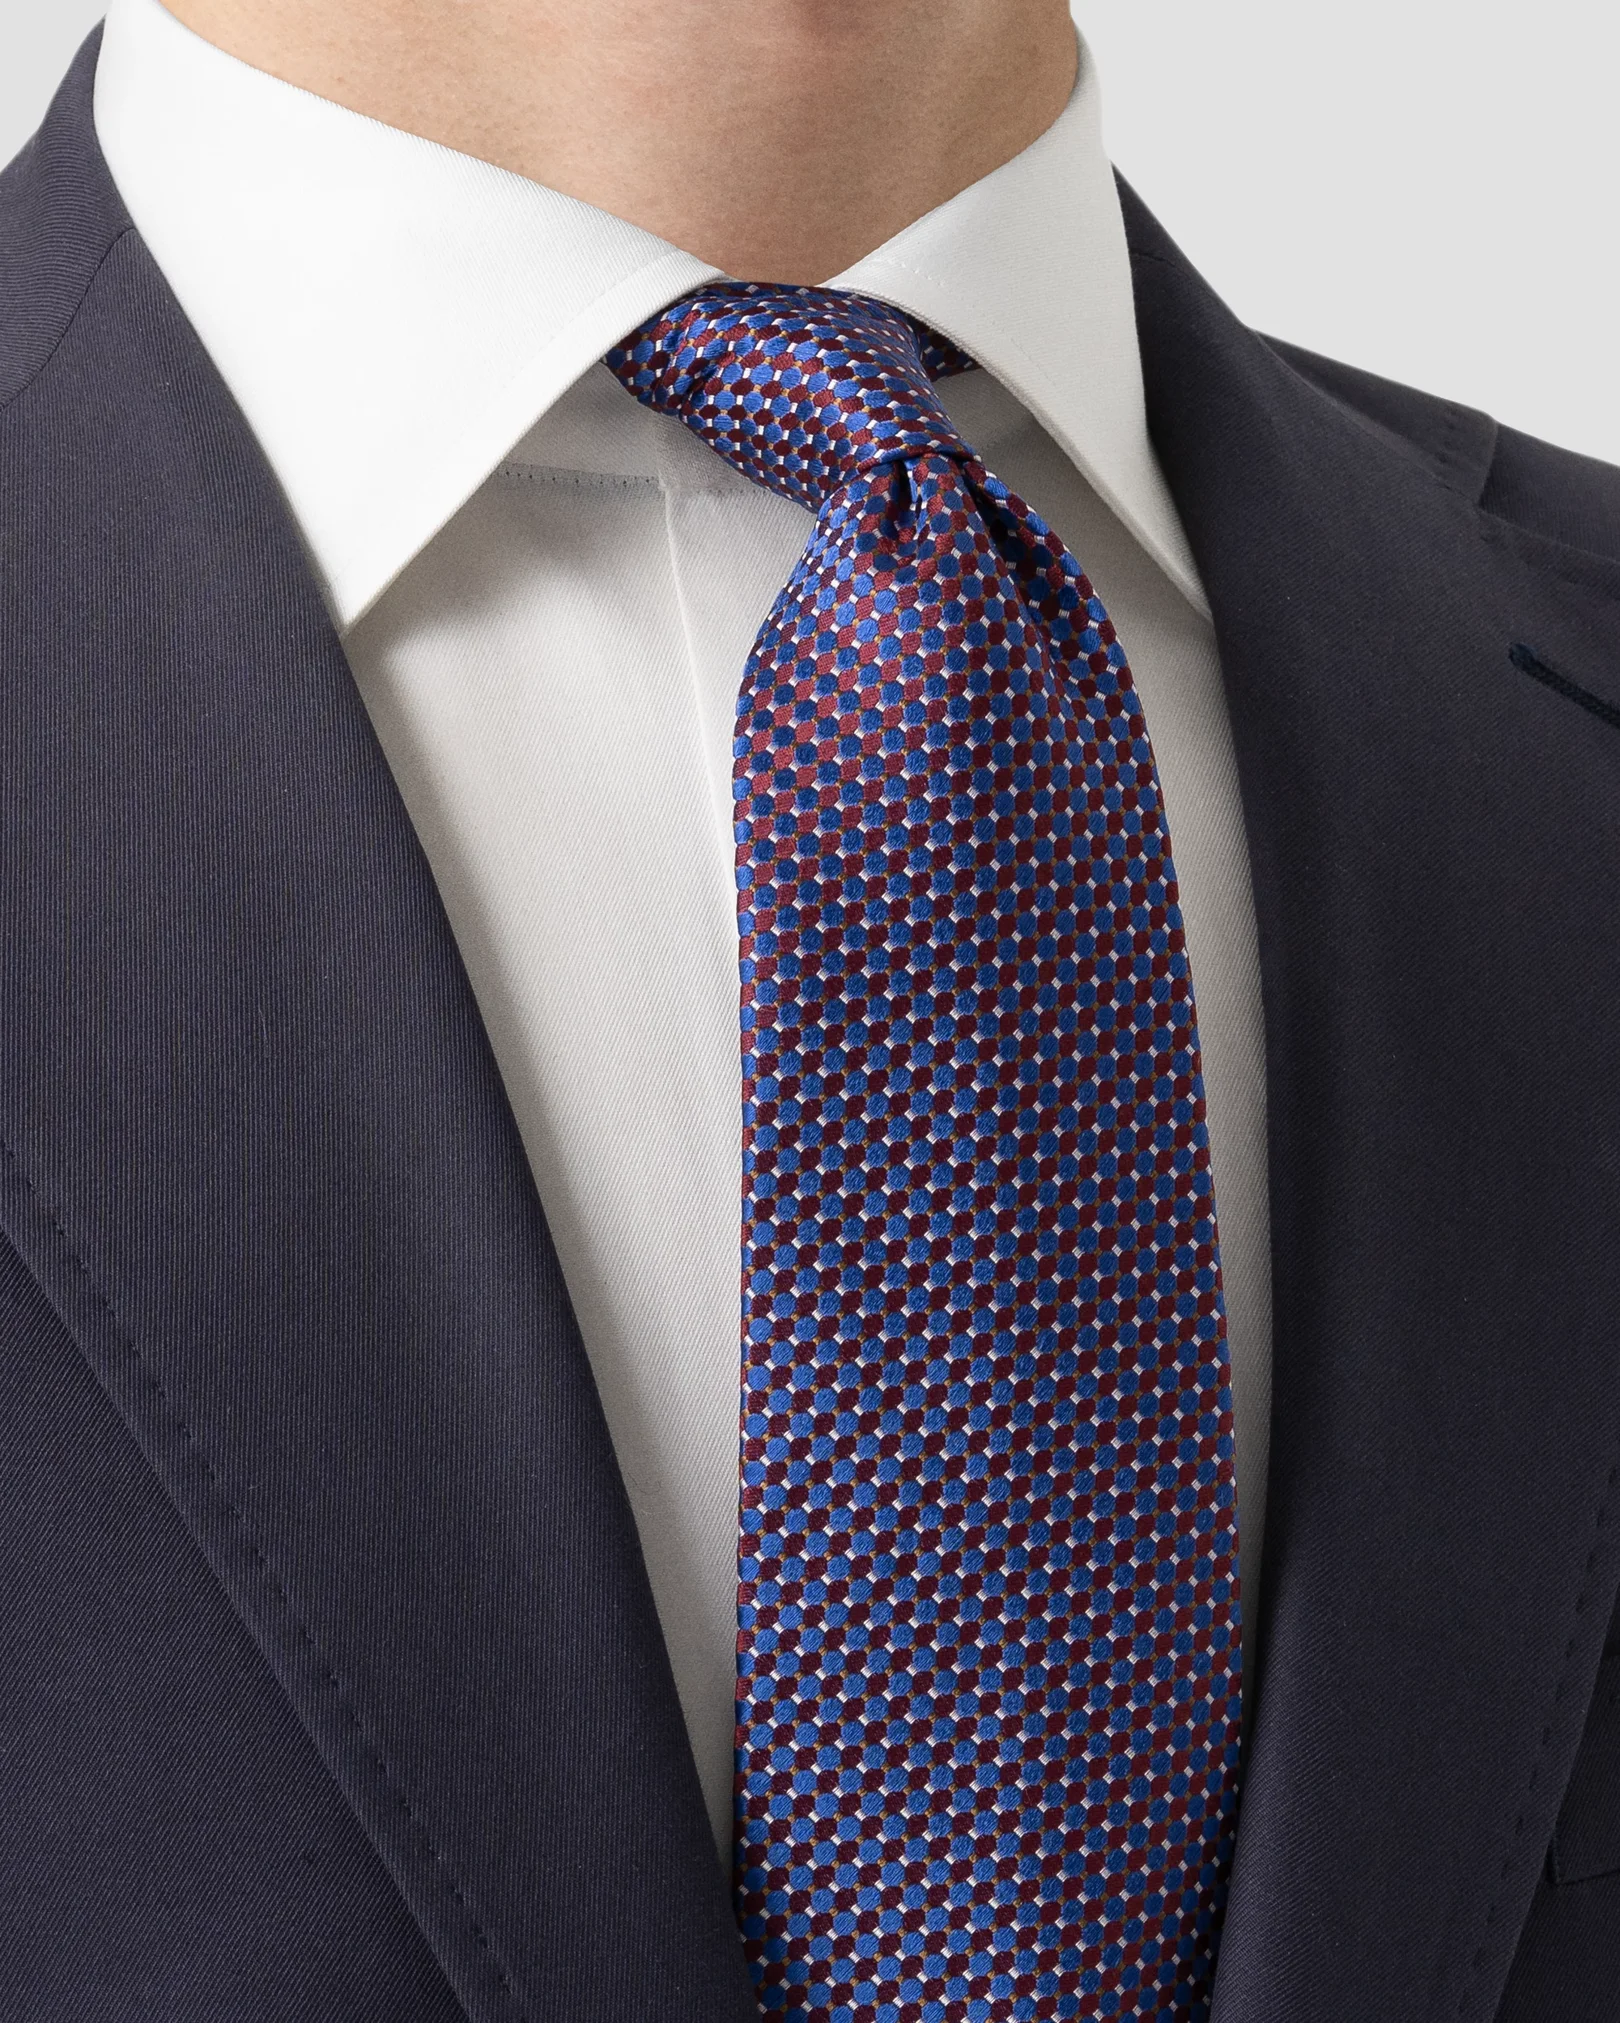 Eton - red geometric silk tie